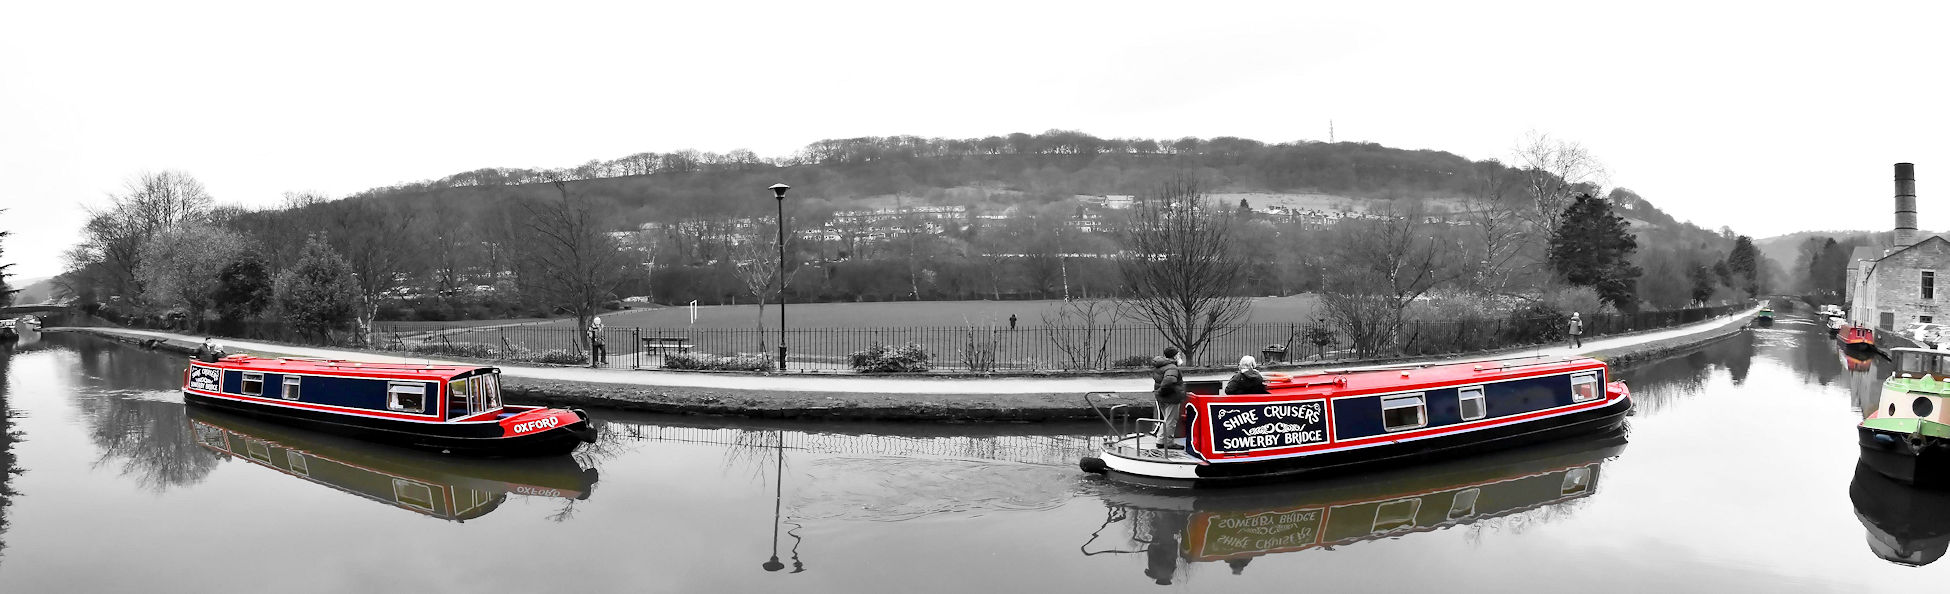 Moorings on the Marton Pool, Leeds & Liverpool Canal